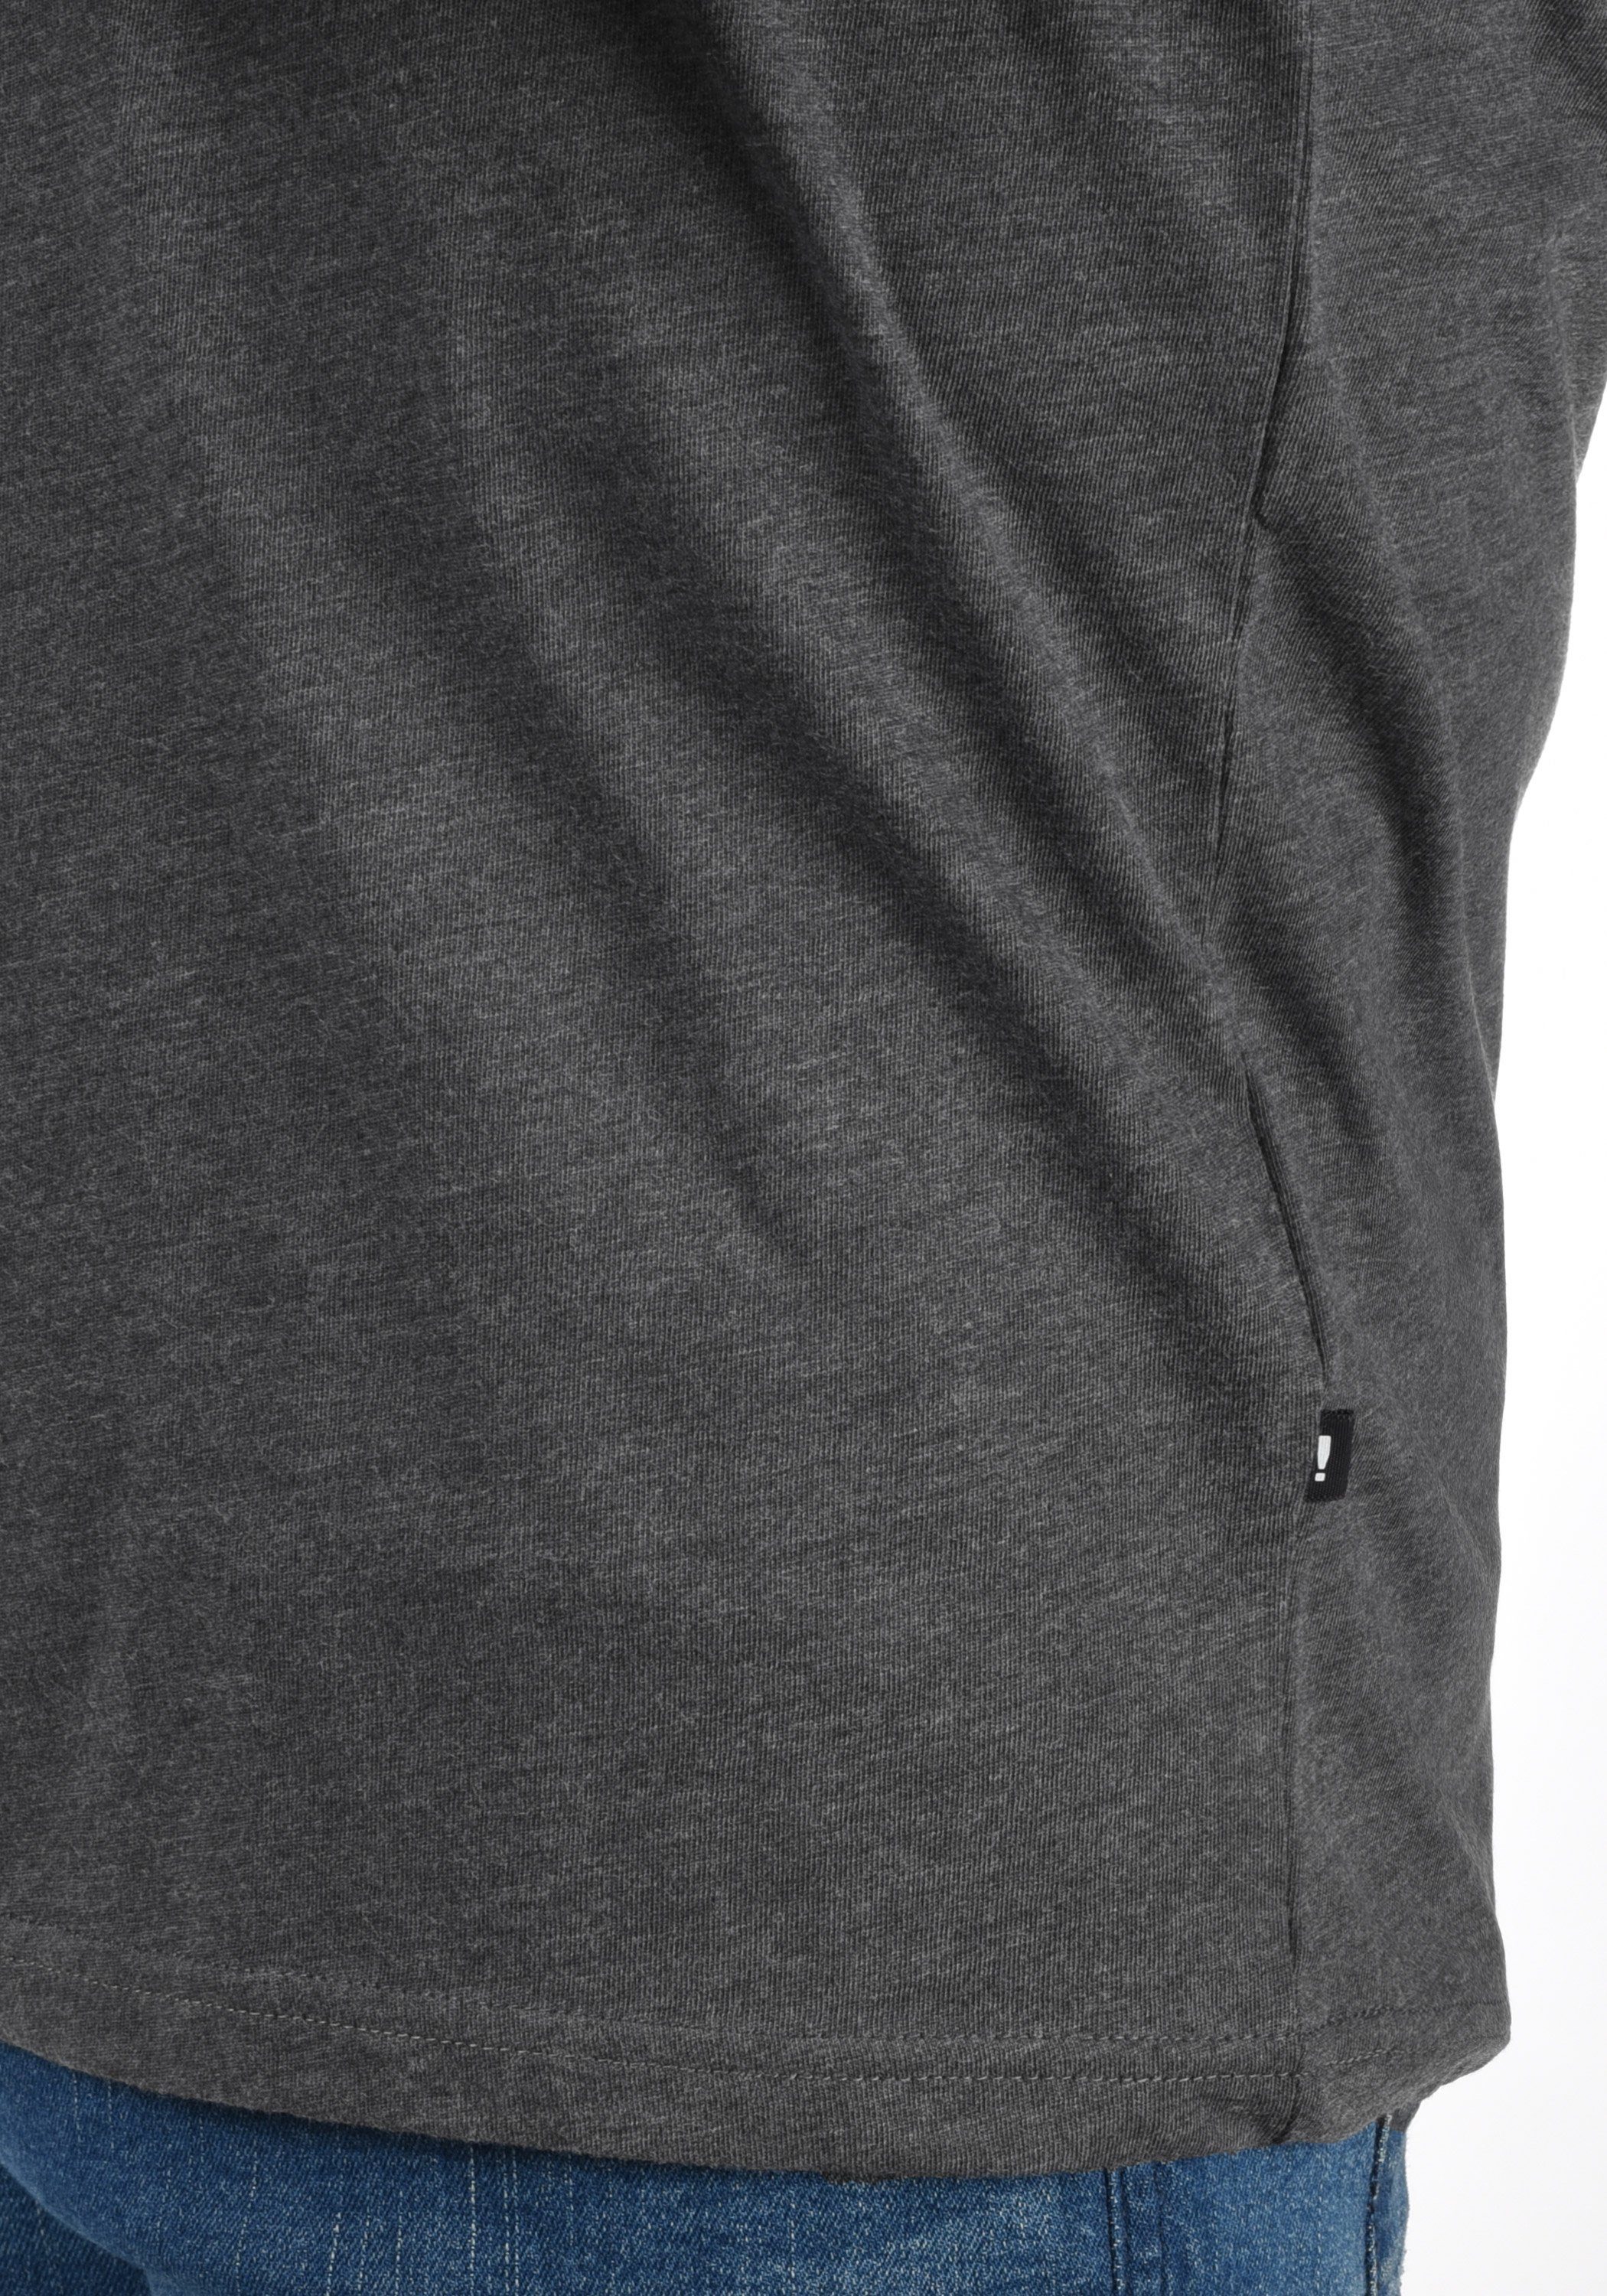 Melange Print-Shirt (8288) T-Shirt Grey !Solid SDCimo Dark